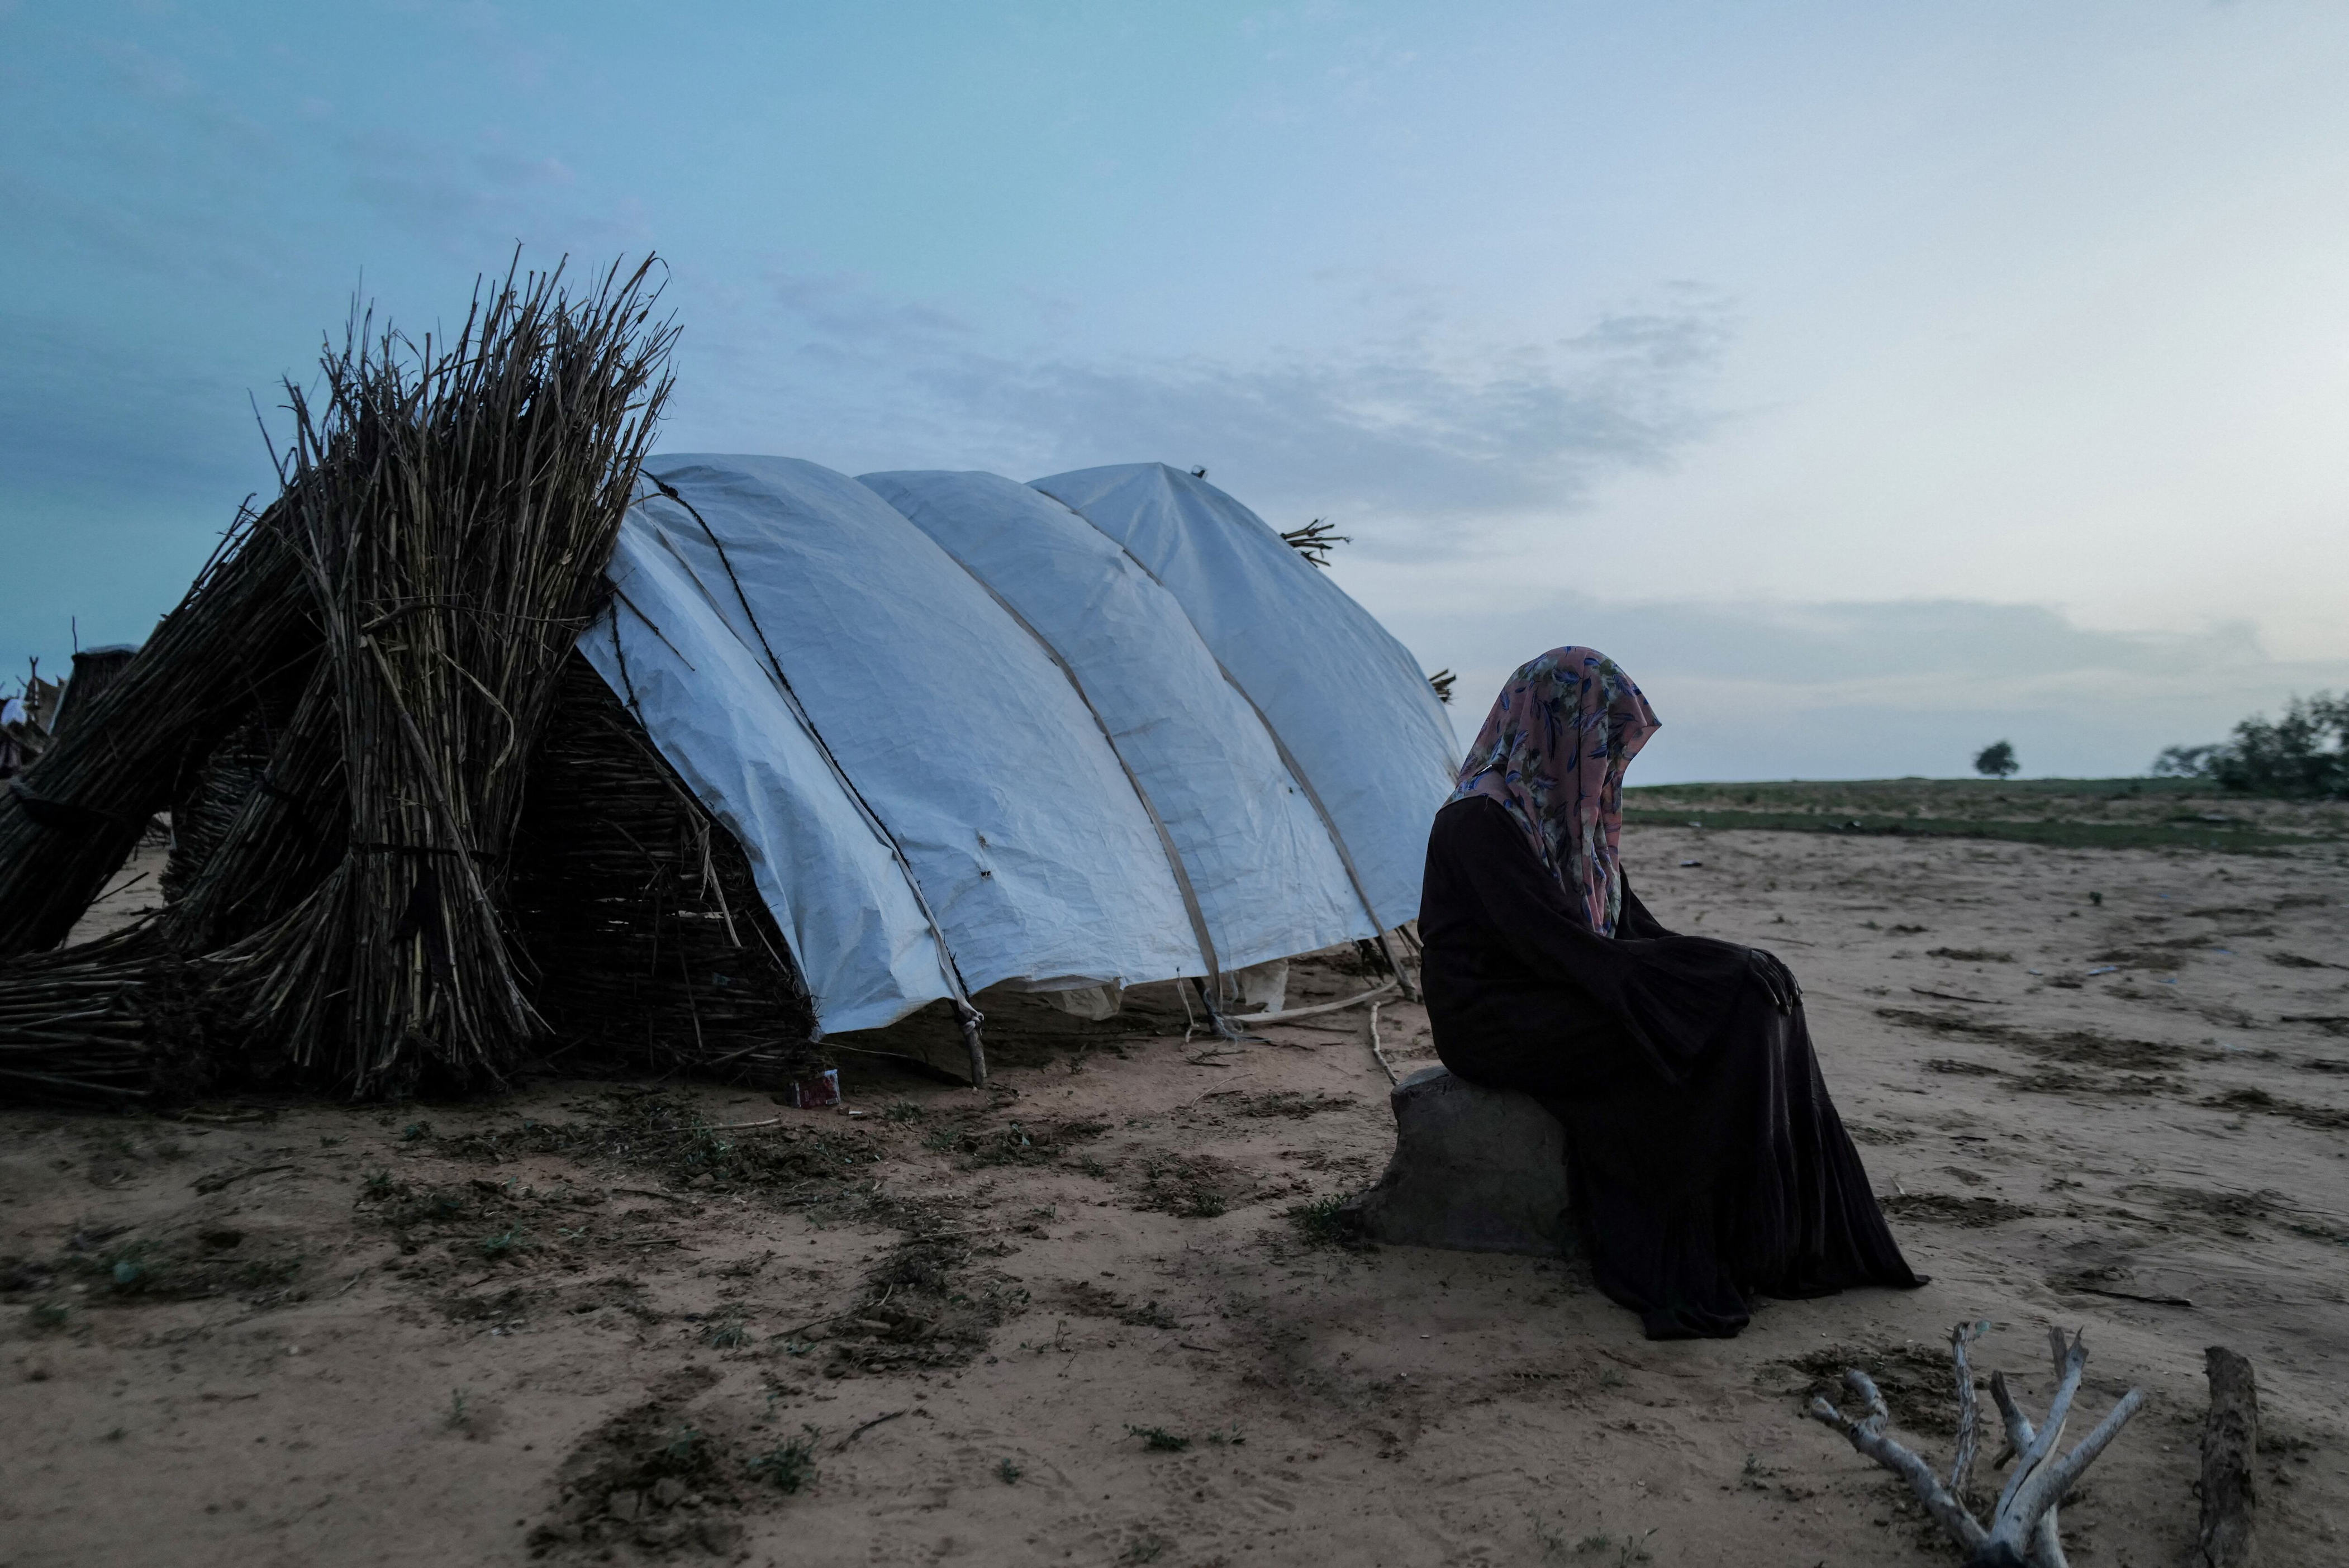 sudan's 'non-ending' war pushing many to despair